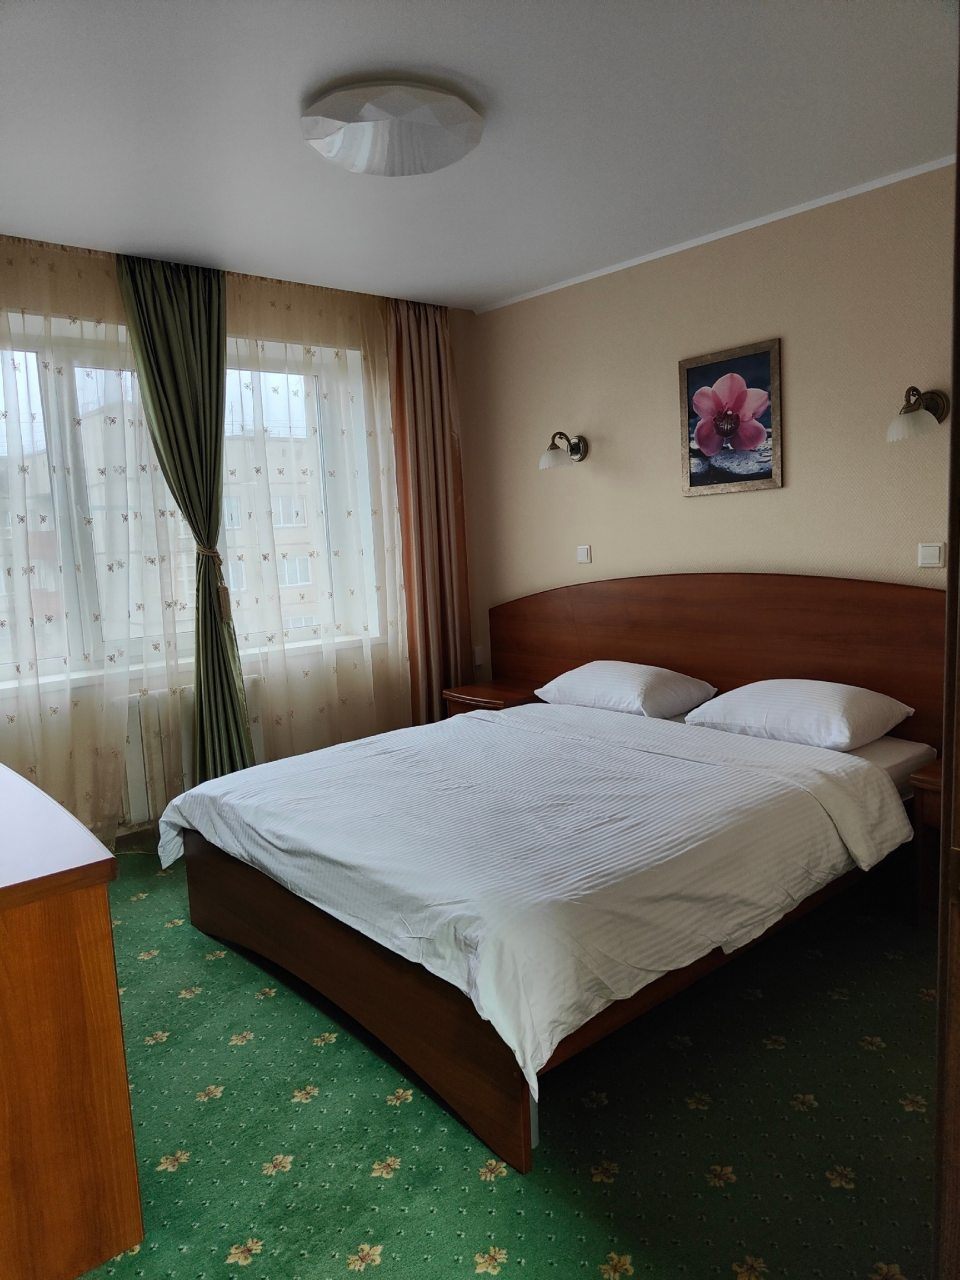 Полулюкс (Стандарт) гостиницы Планета, Челябинск